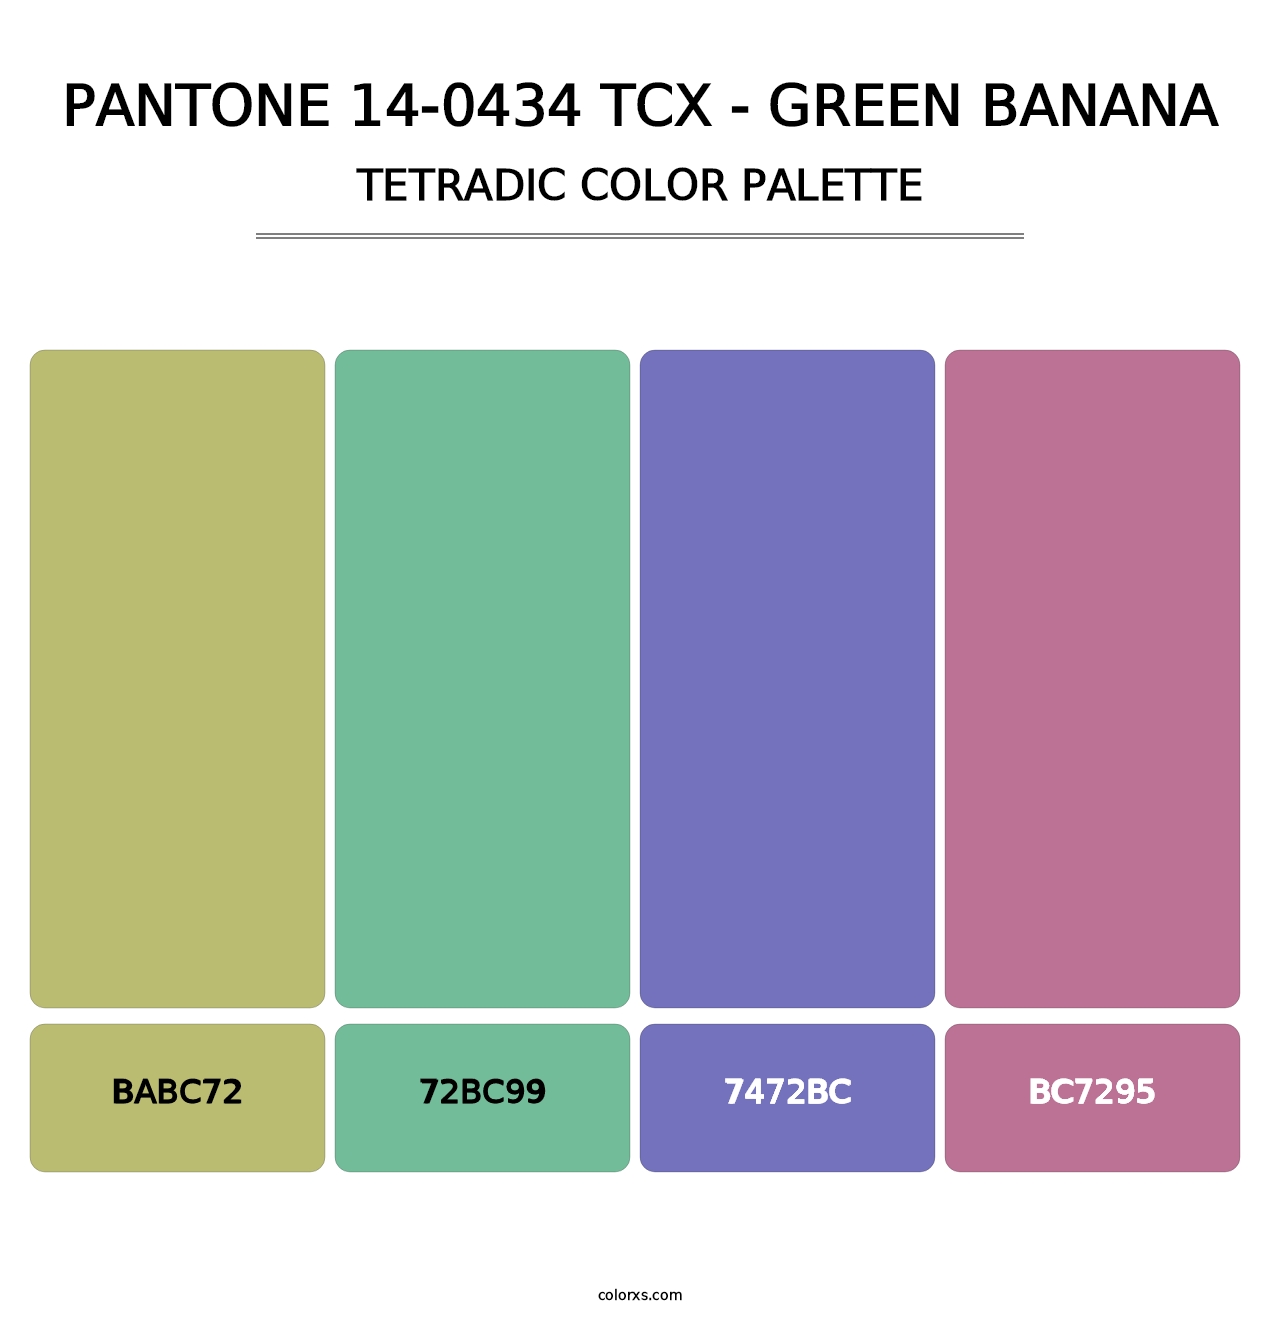 PANTONE 14-0434 TCX - Green Banana - Tetradic Color Palette